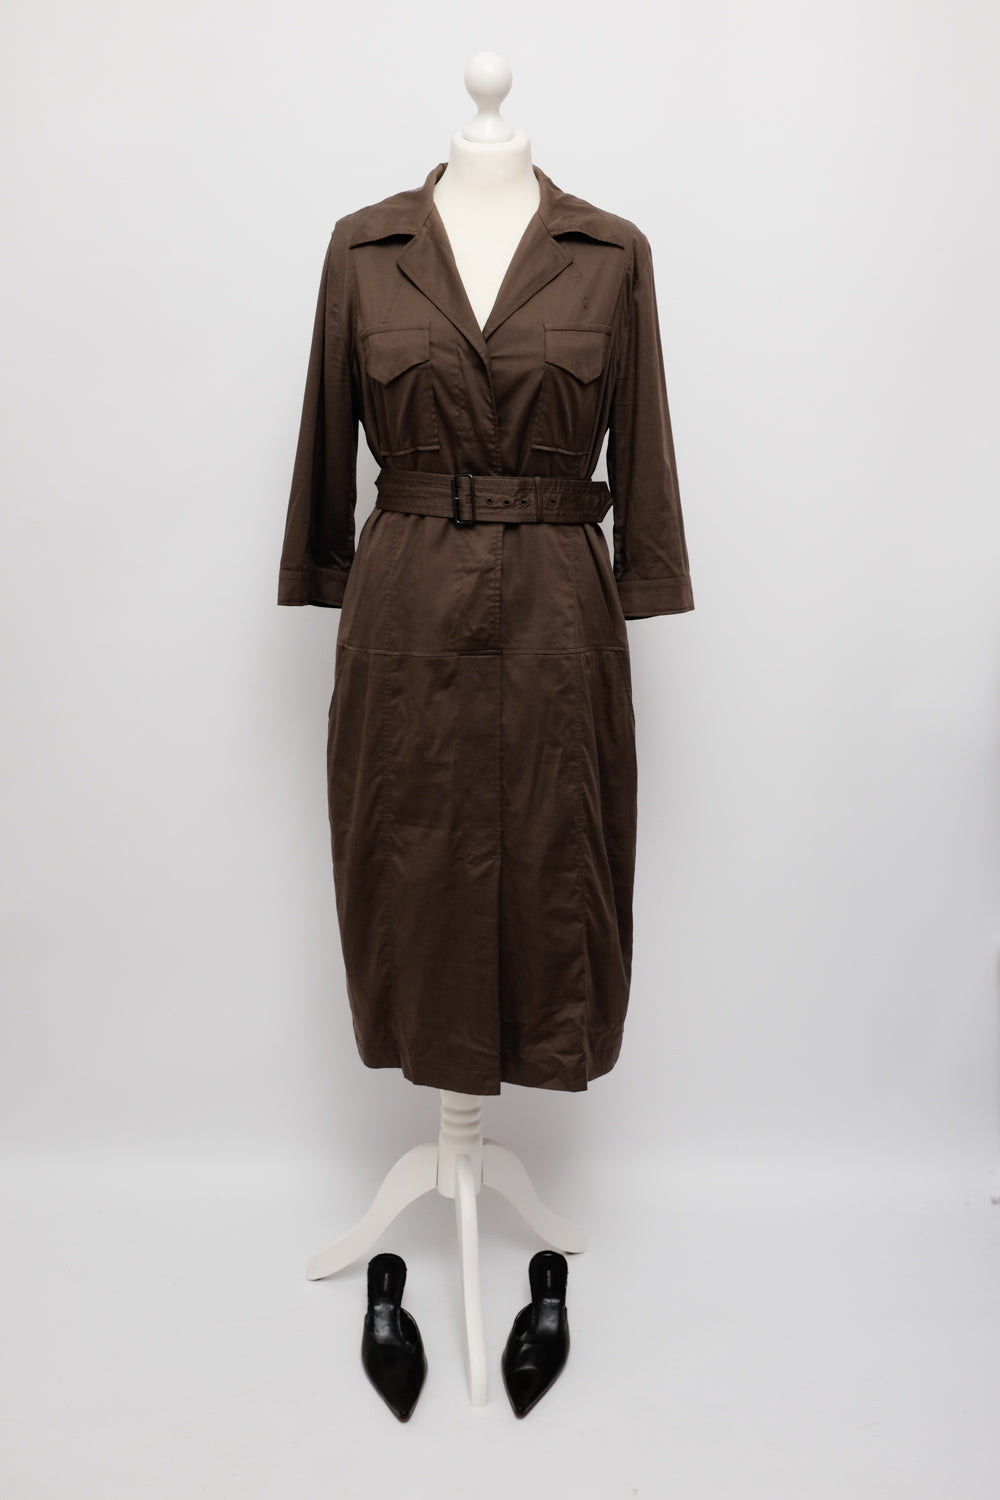 RENE LEZARD COTTON BROWN LONG SHIRT DRESS